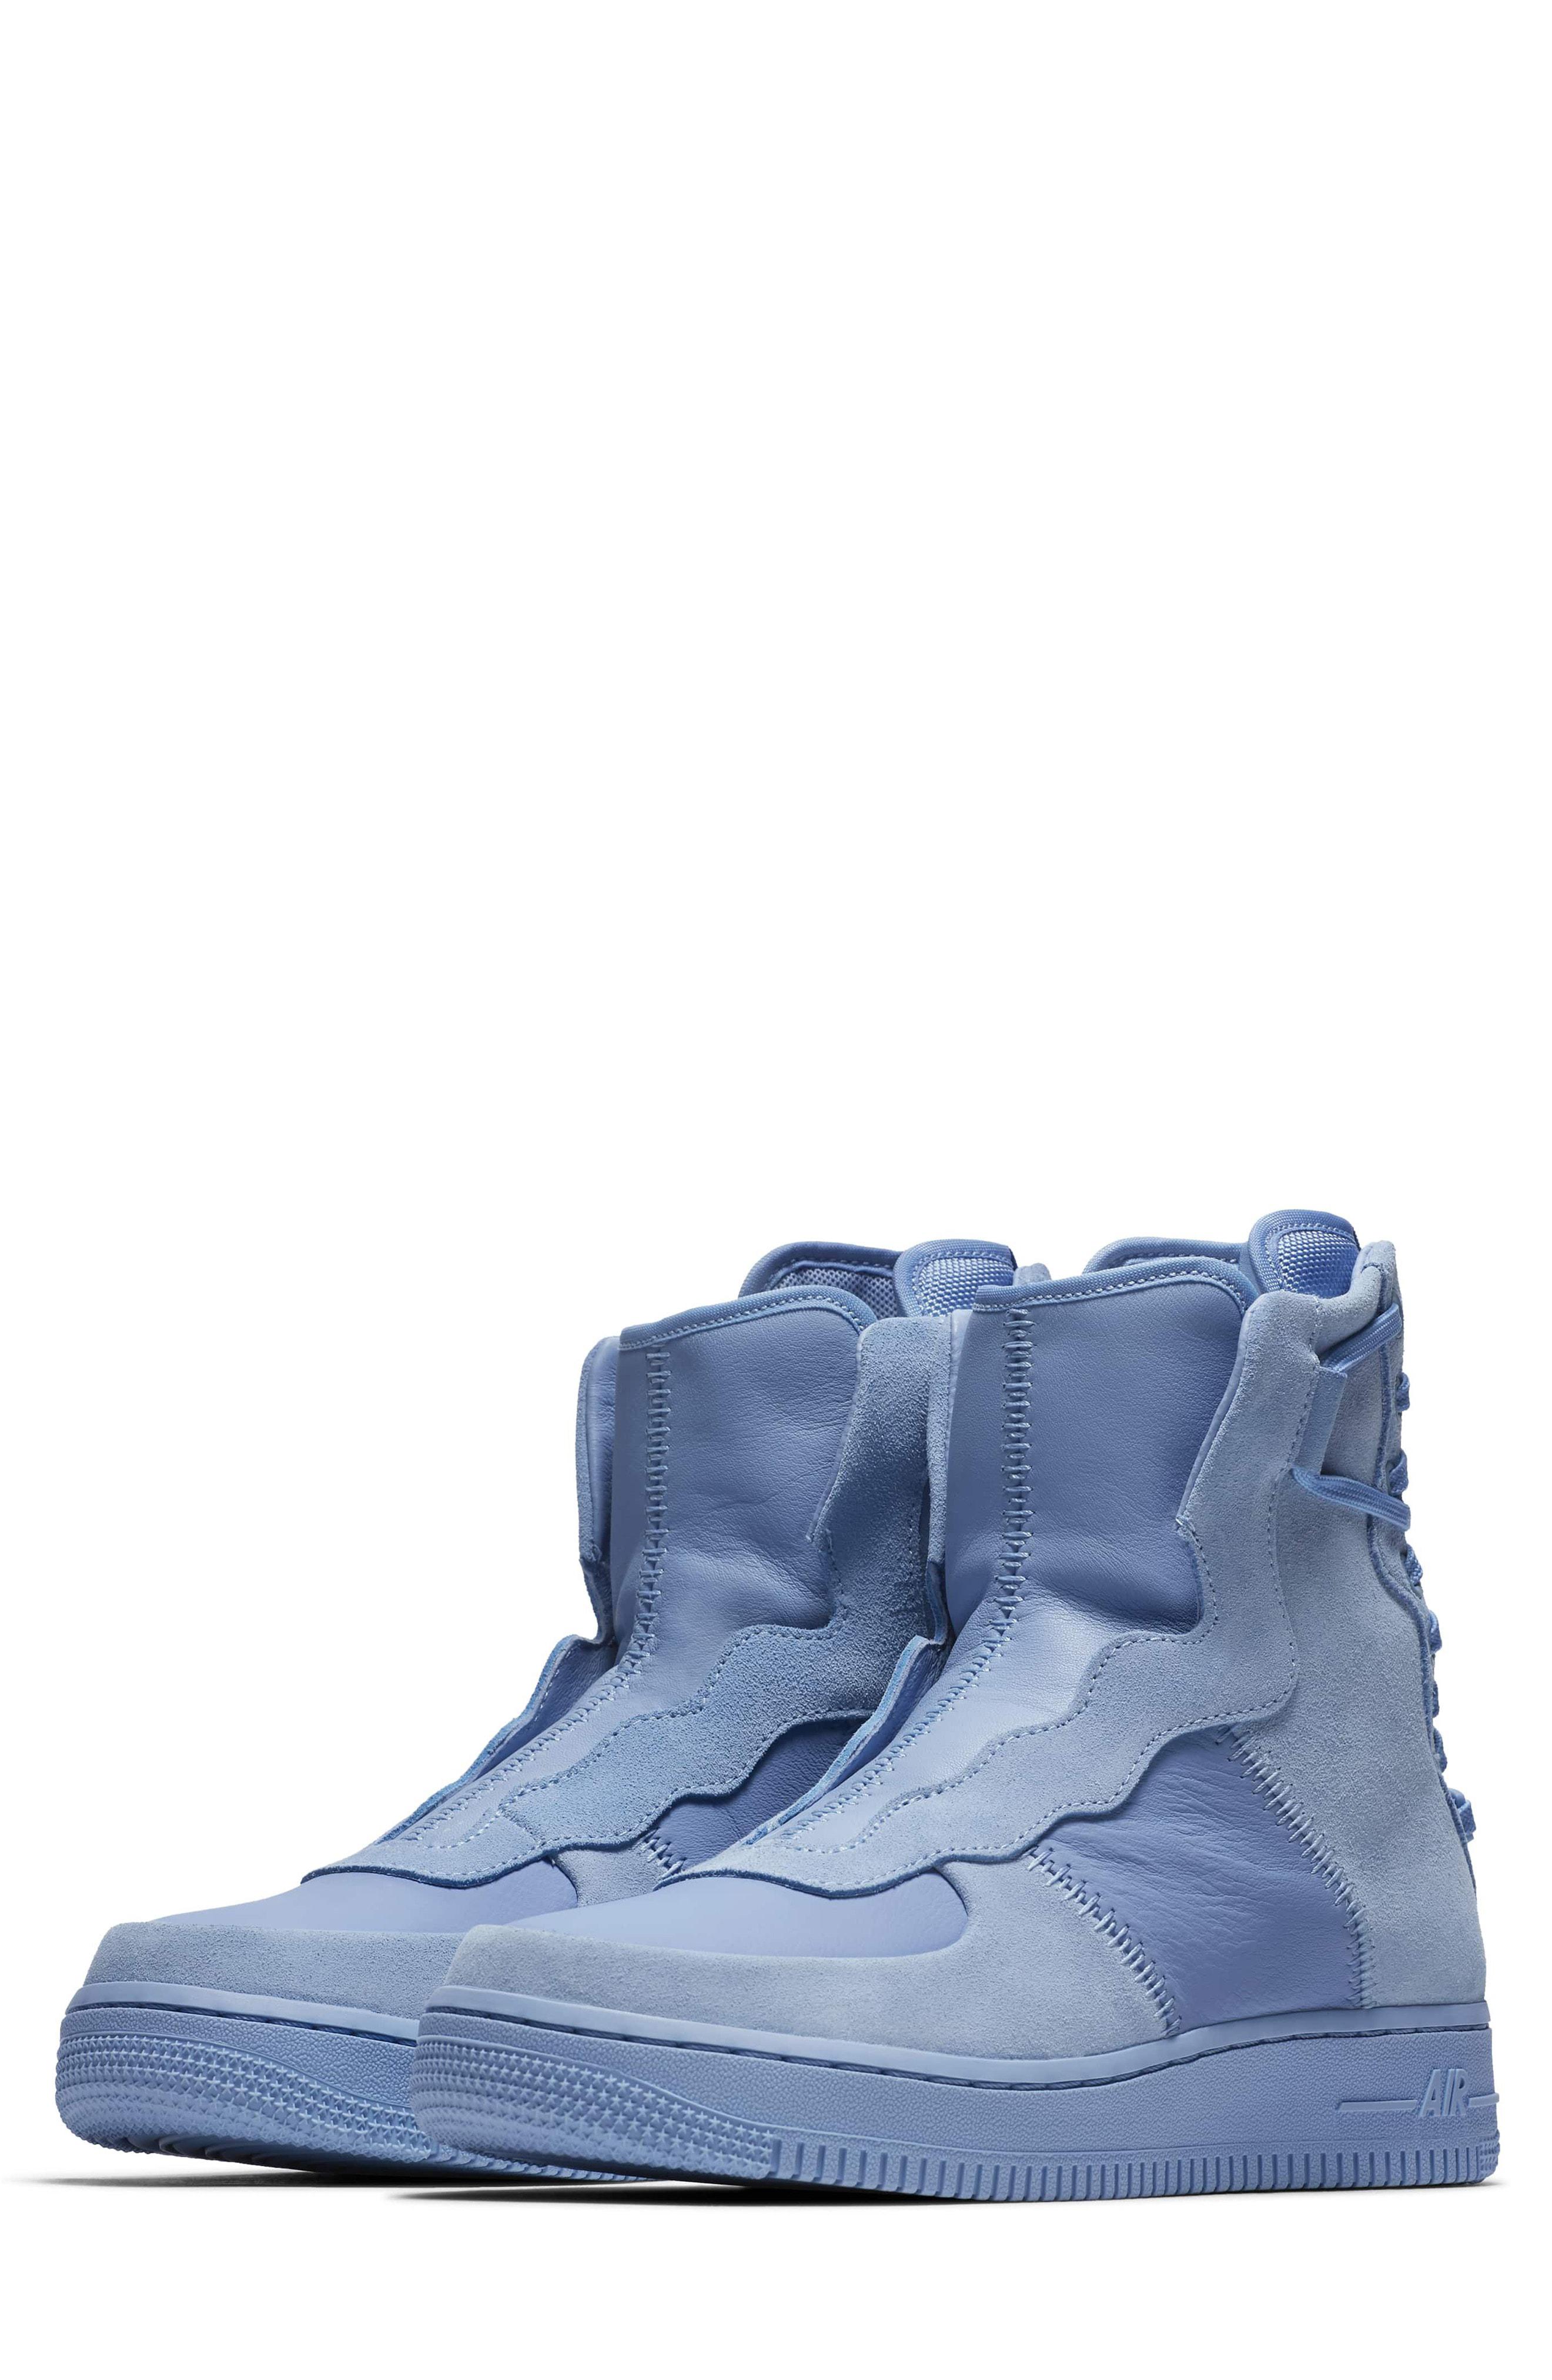 women's nike air force 1 rebel xx casual shoes